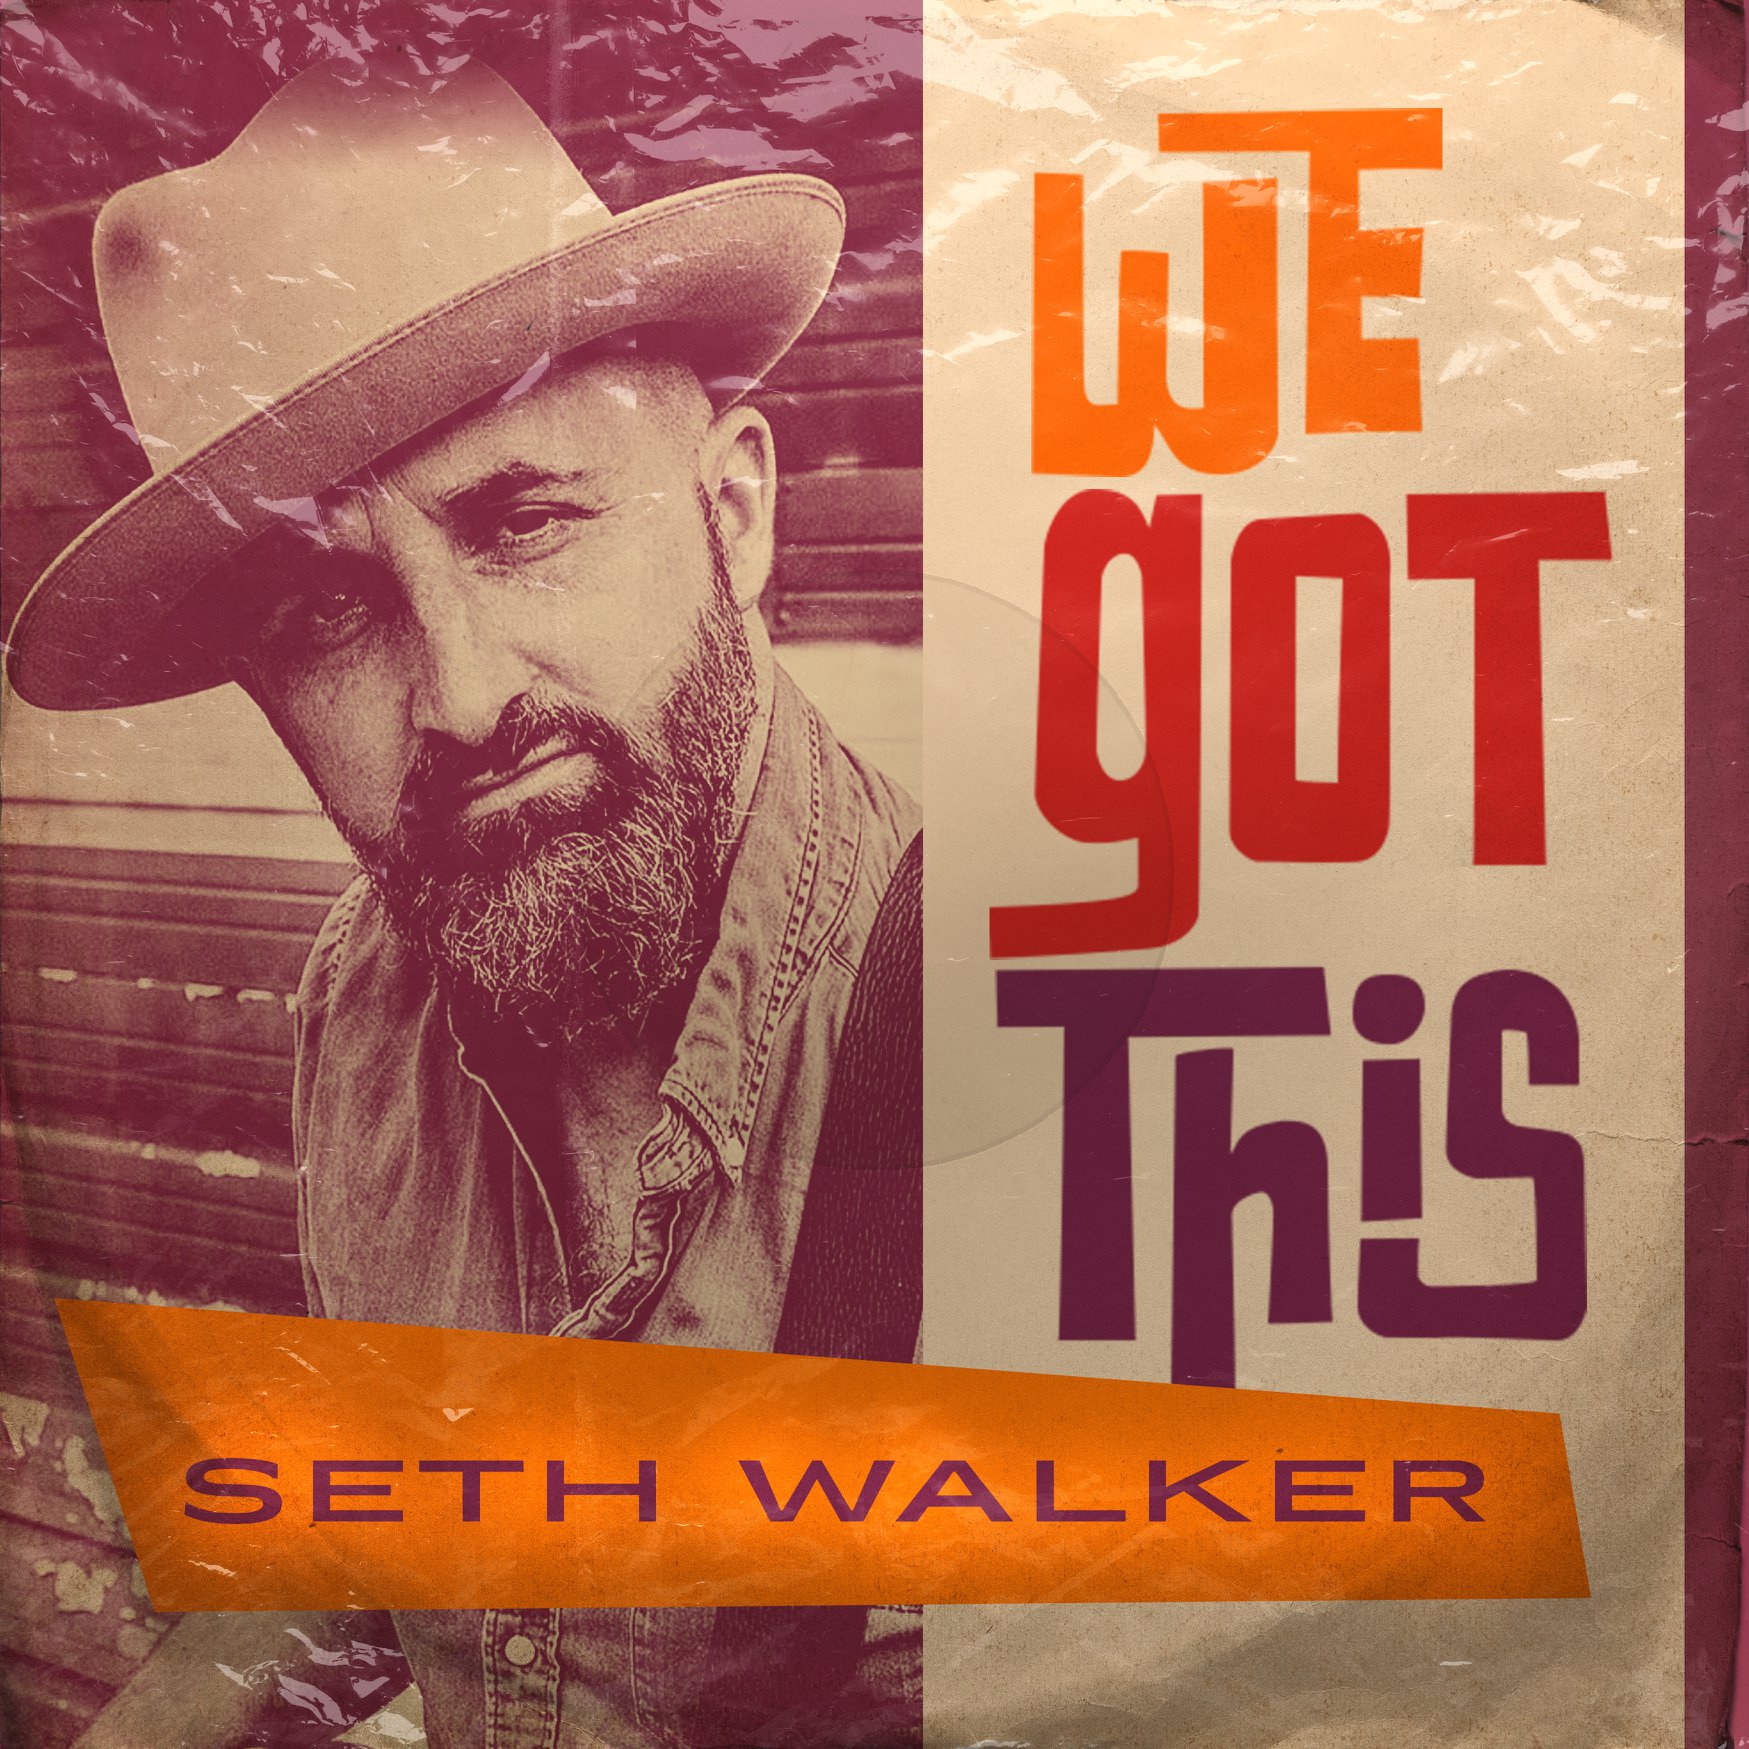 We Got This | Seth Walker